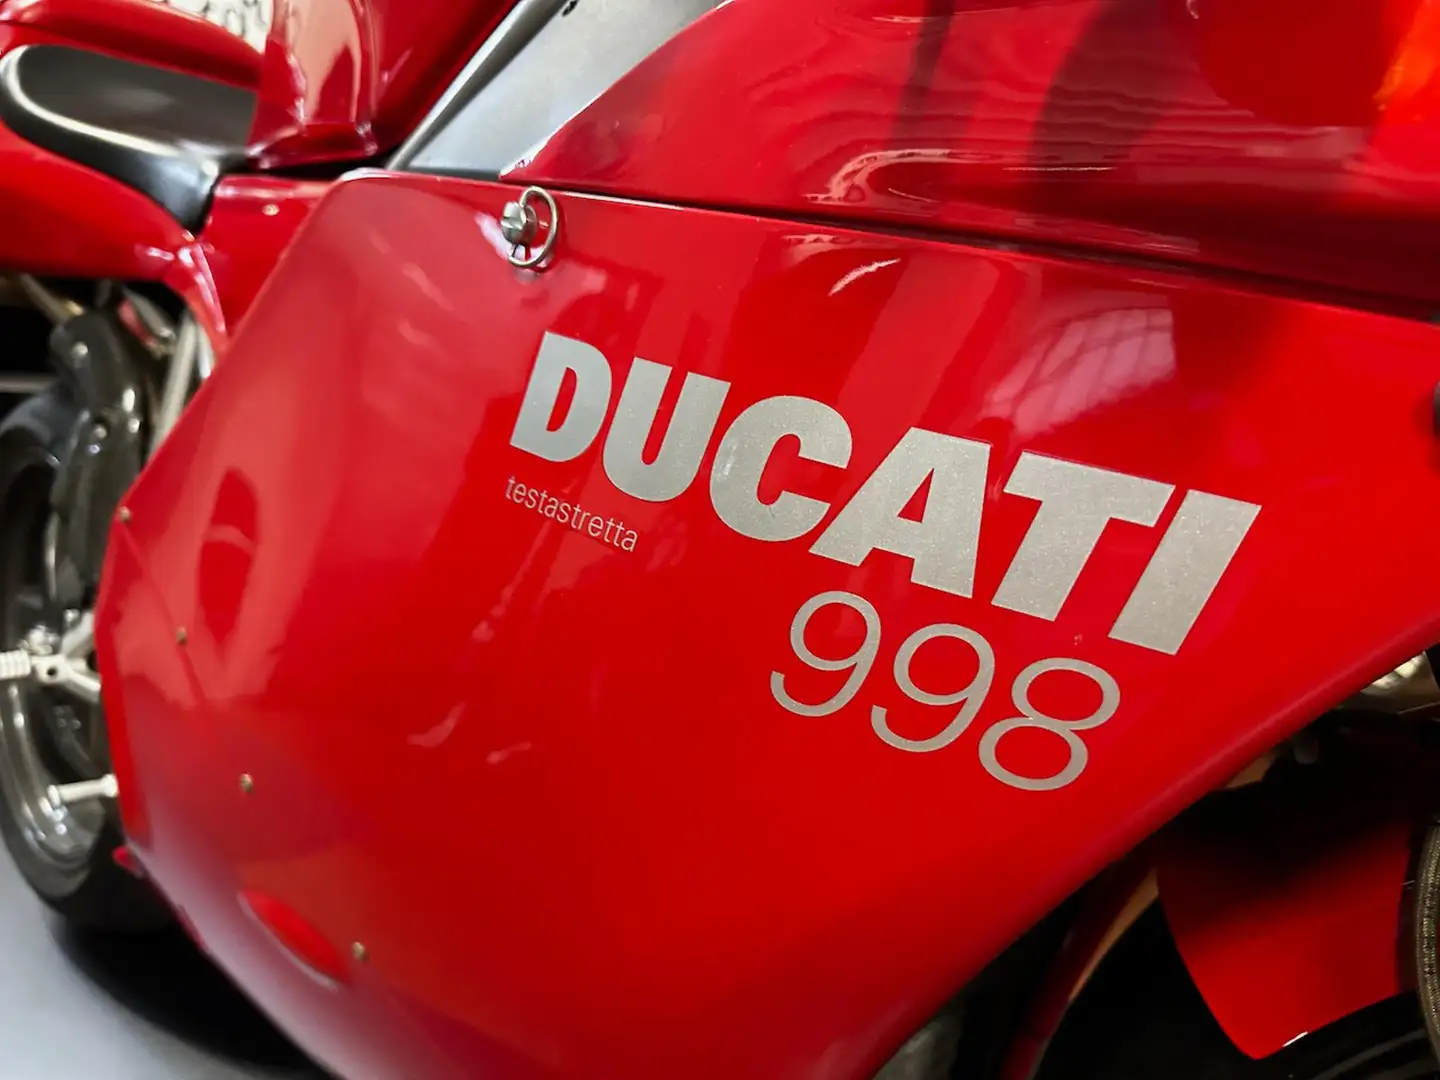 Ducati 998 ORIGINALE Červená - 2